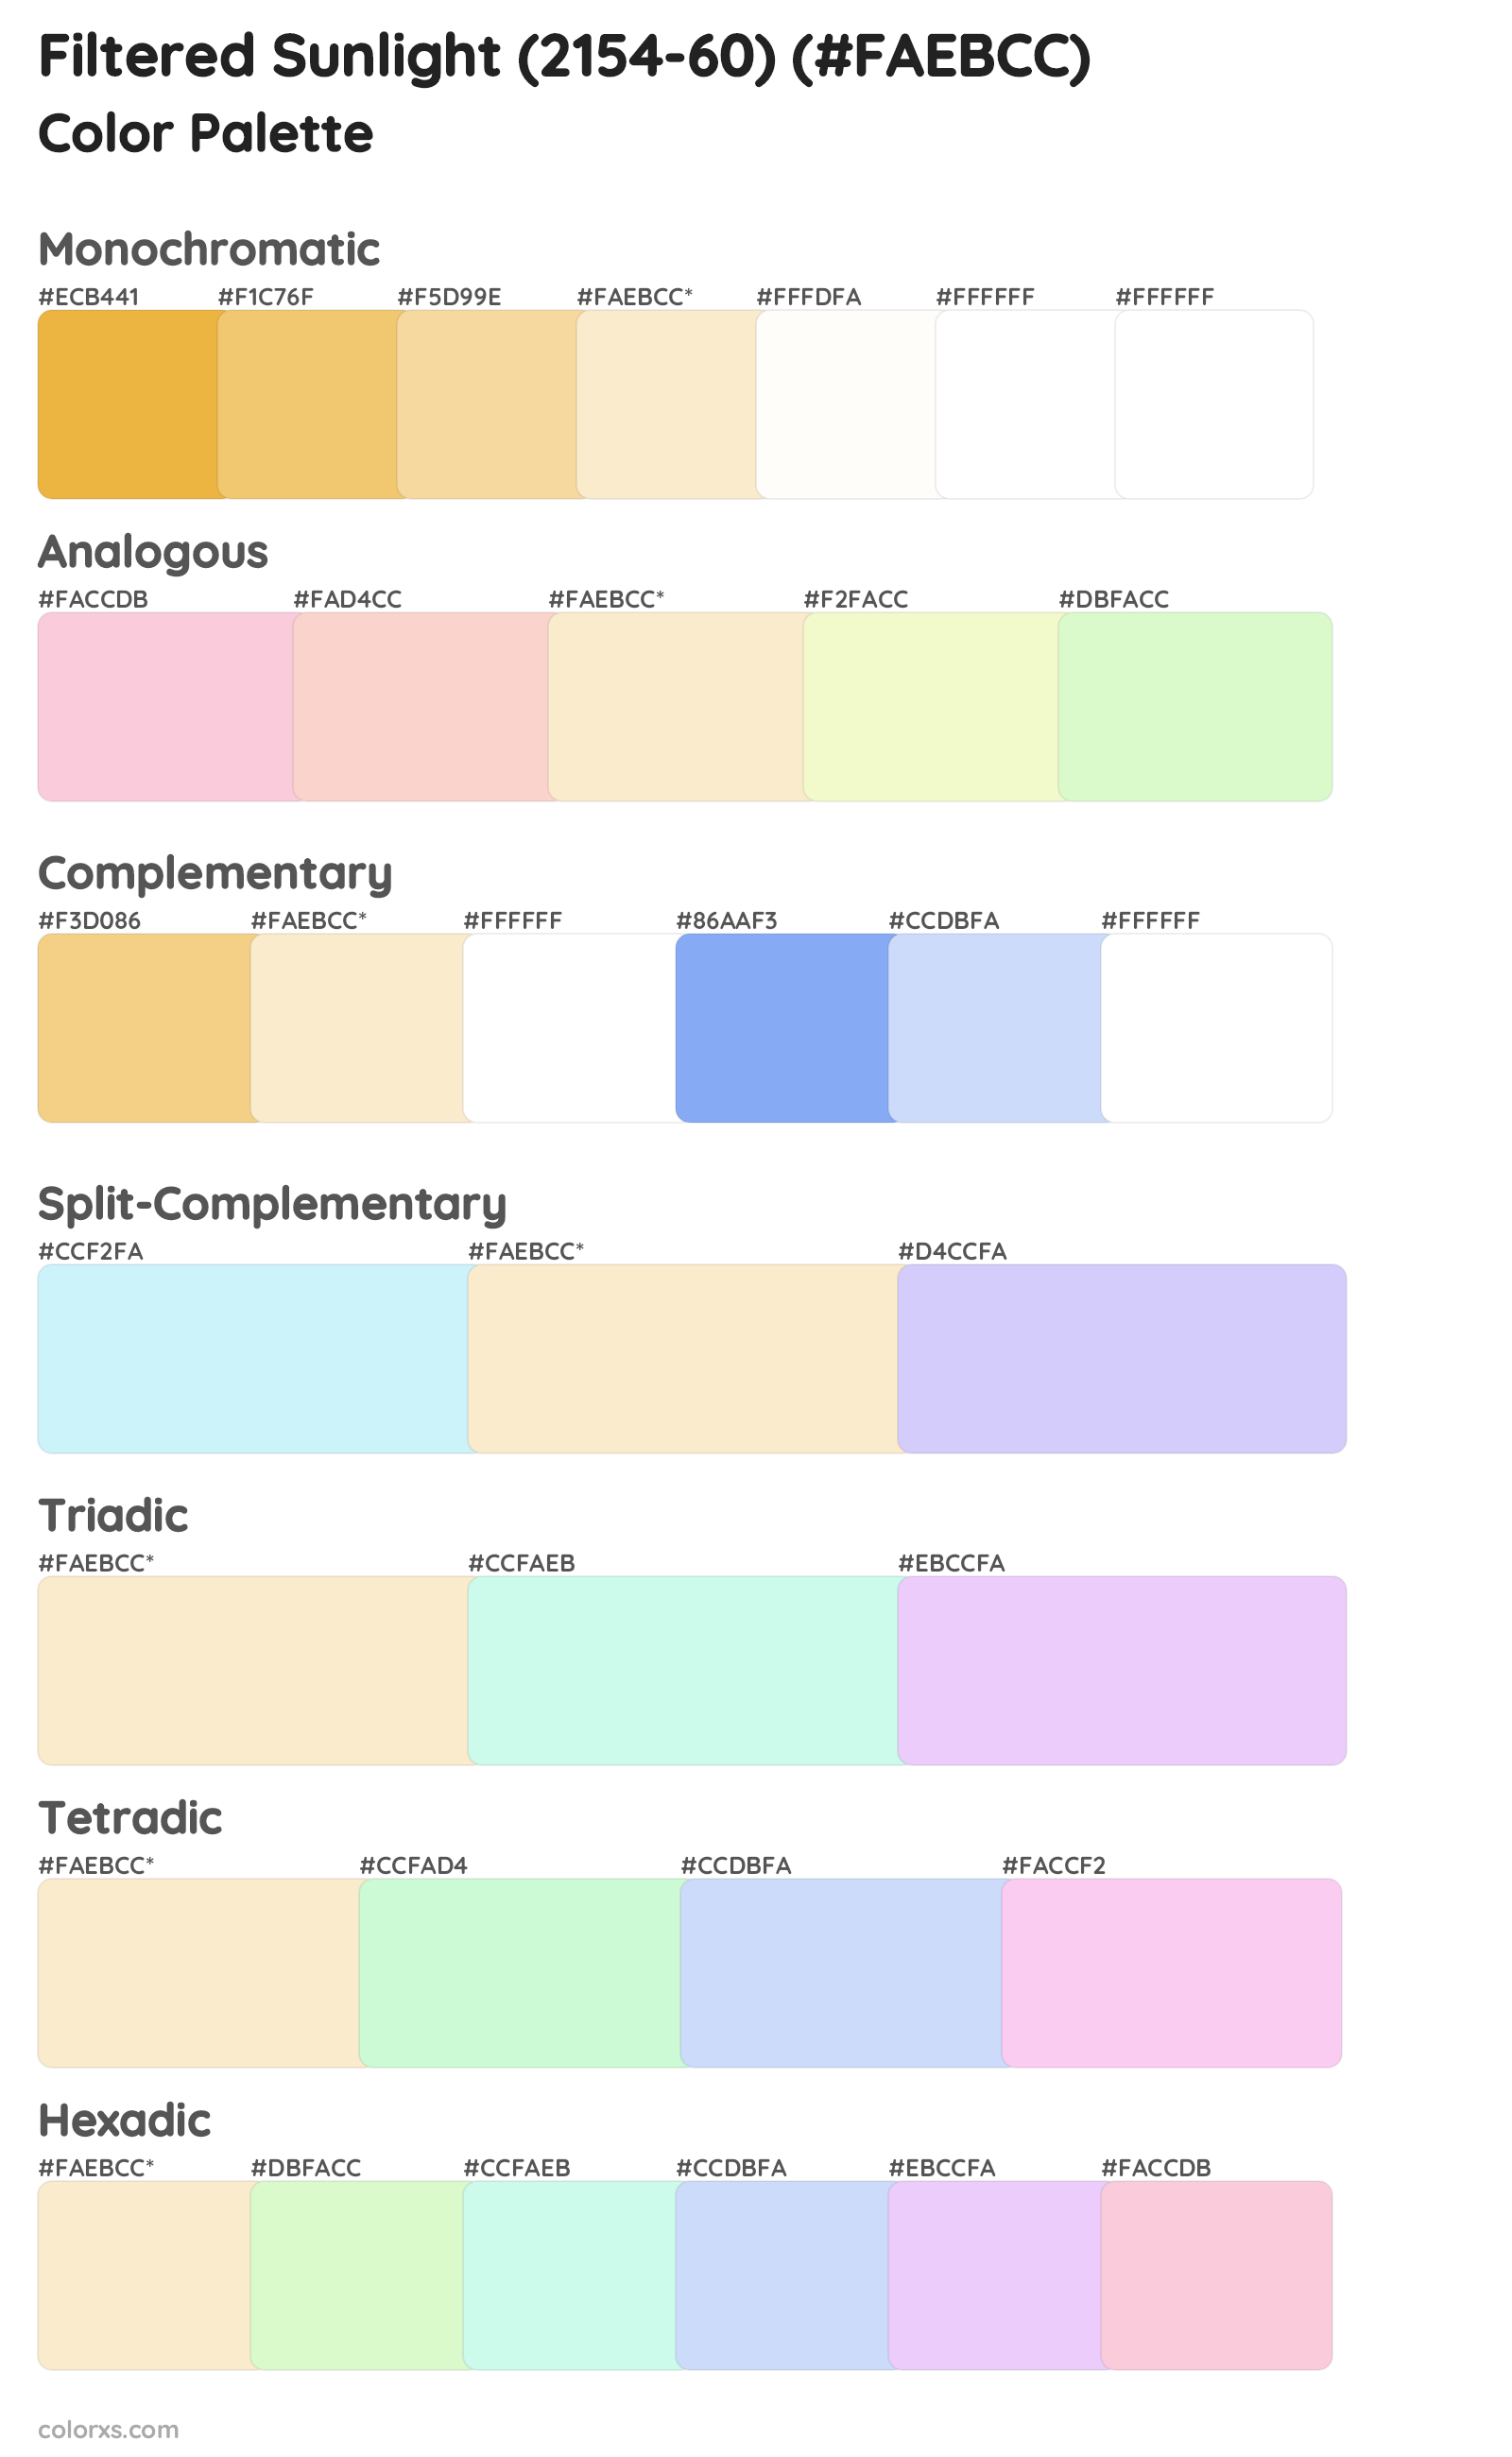 Filtered Sunlight (2154-60) Color Scheme Palettes